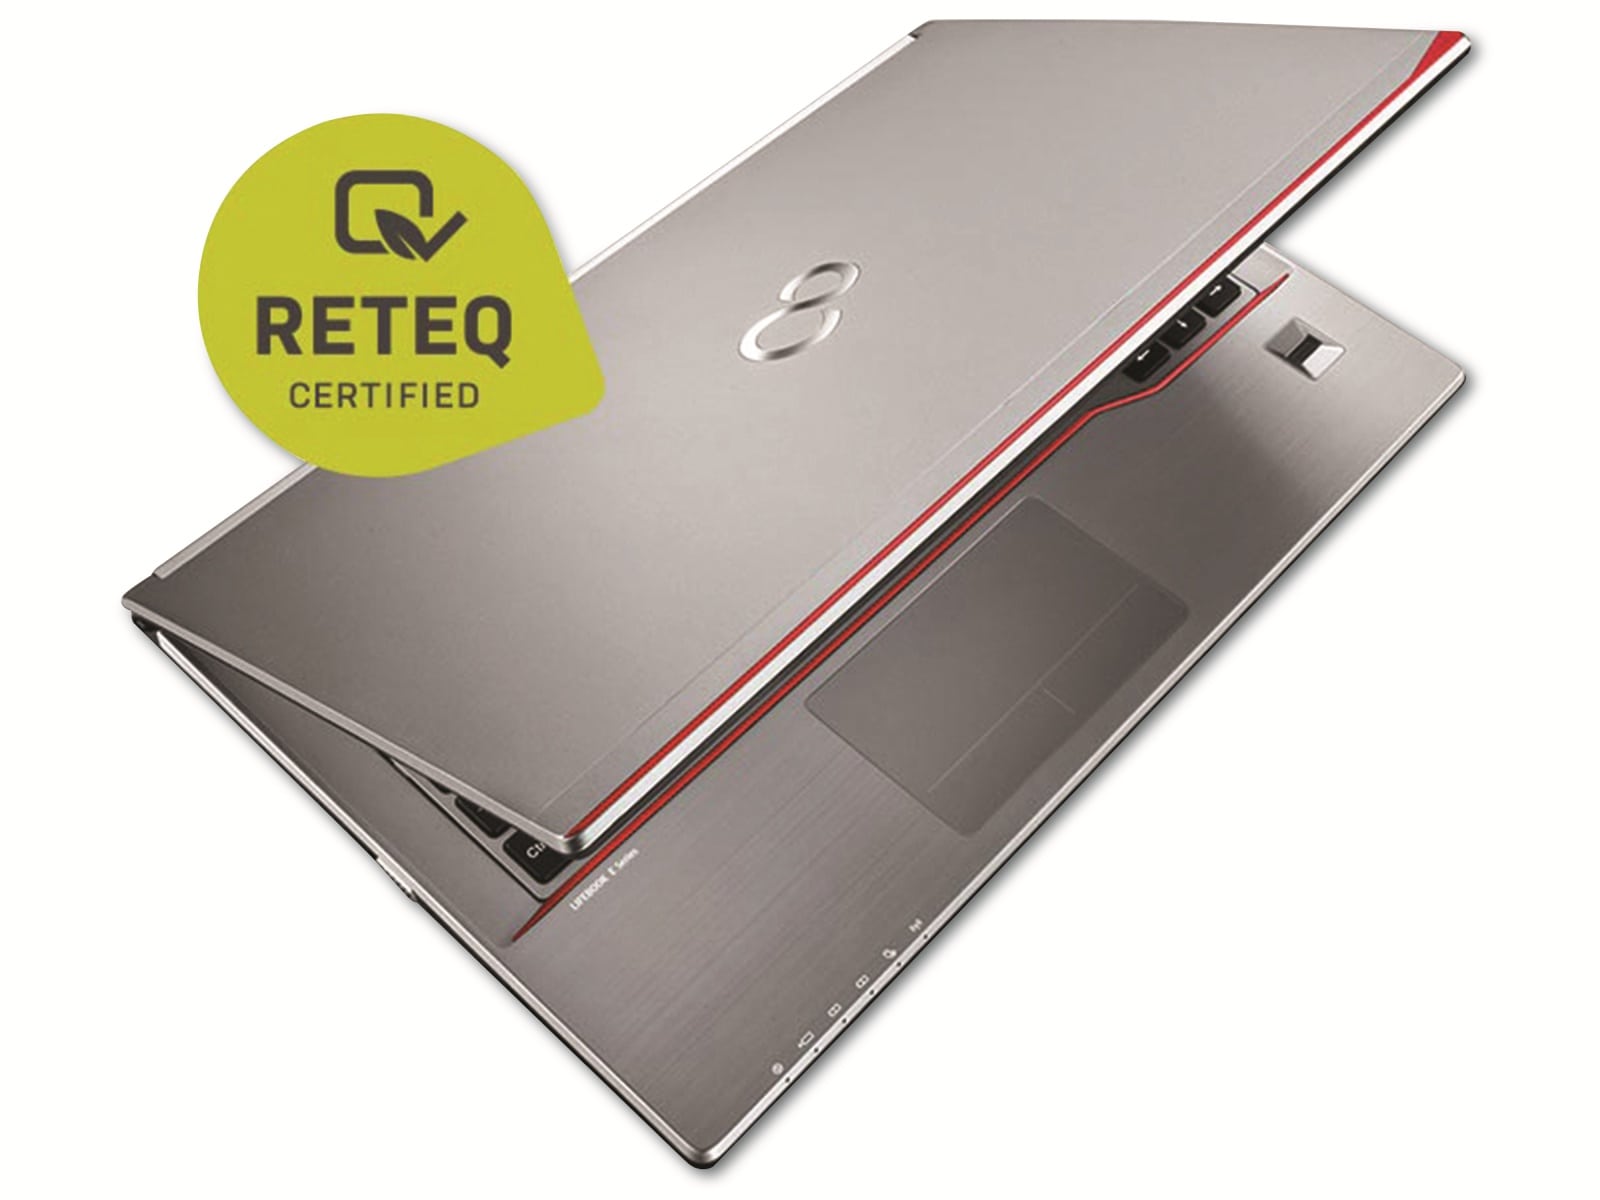 FUJITSU Notebook Lifebook E756, 15,6", Intel i7, 8GB RAM, 500GB SSHD, Refurb.